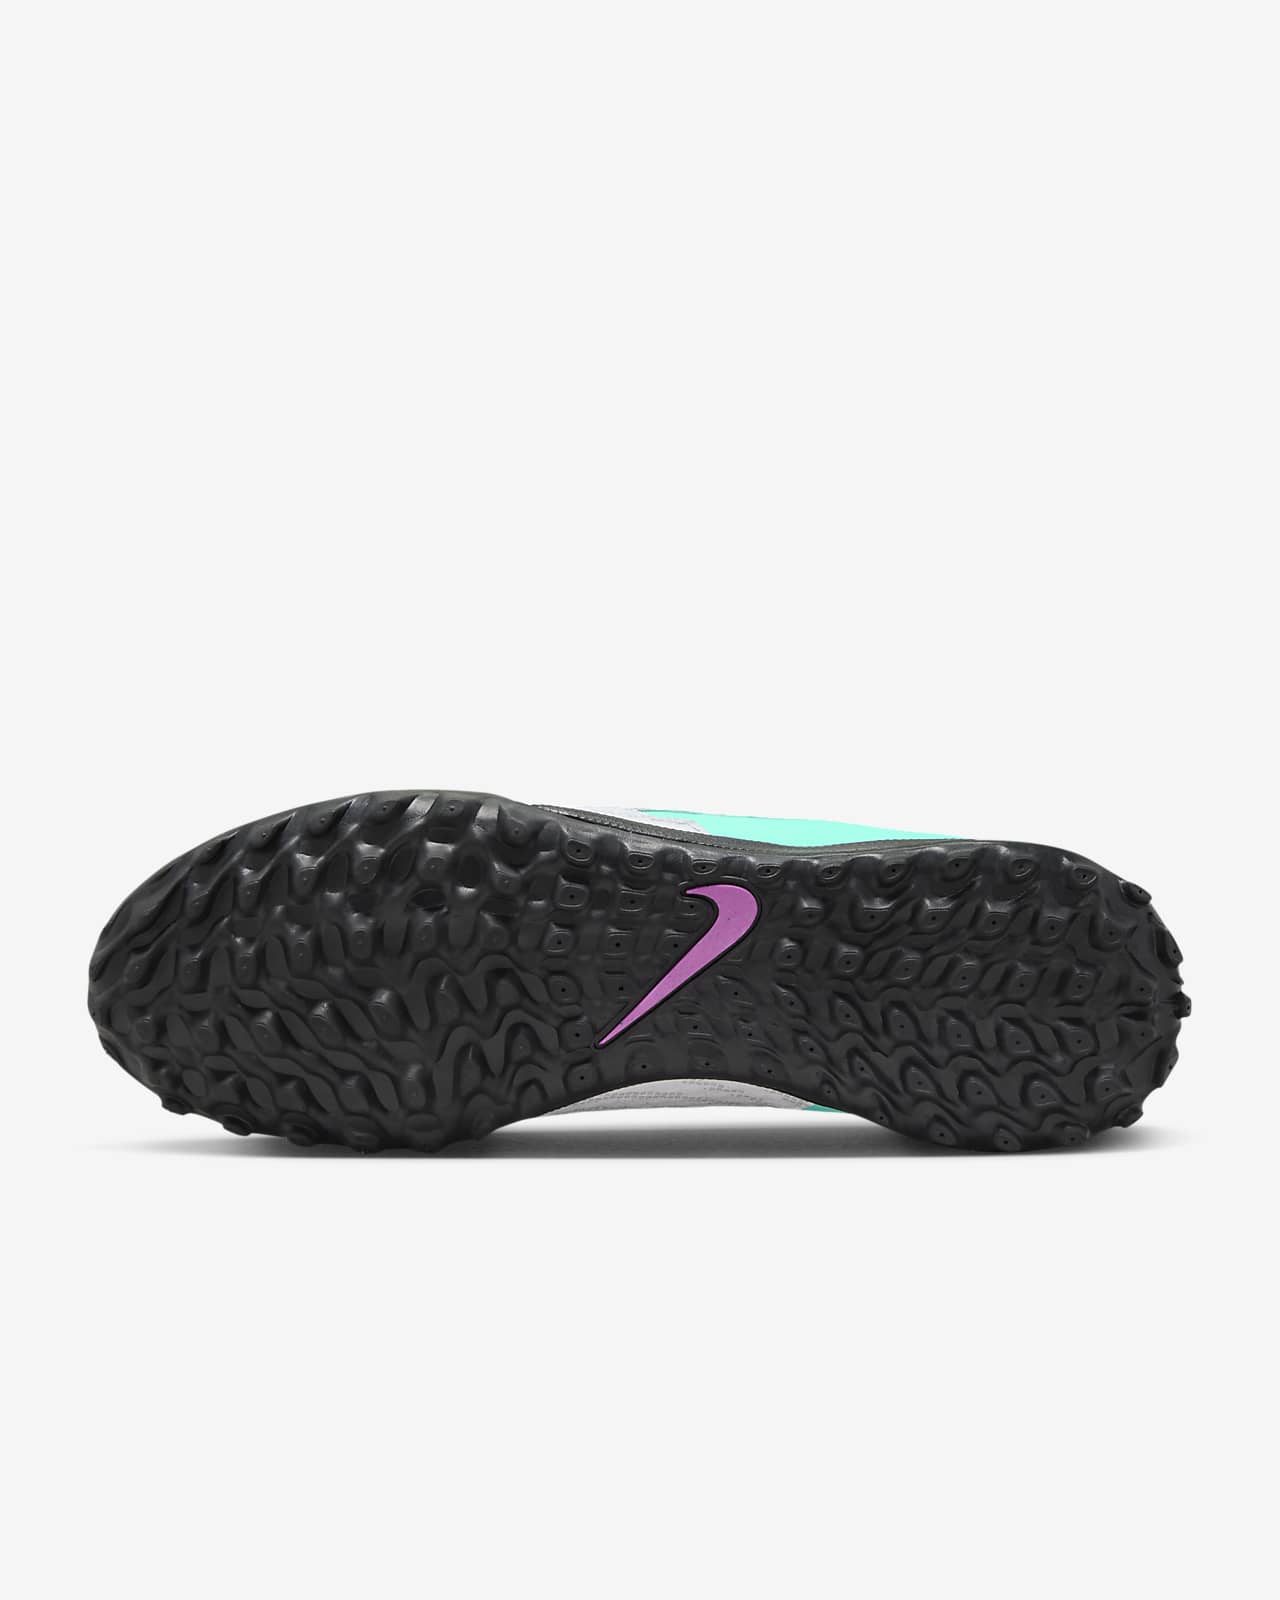 Zapatillas deportivas Nike Performance Hombre  ACADEMY CR7 TF - Botas de fútbol  multitacos white/black/pure platinum - Education Lamp